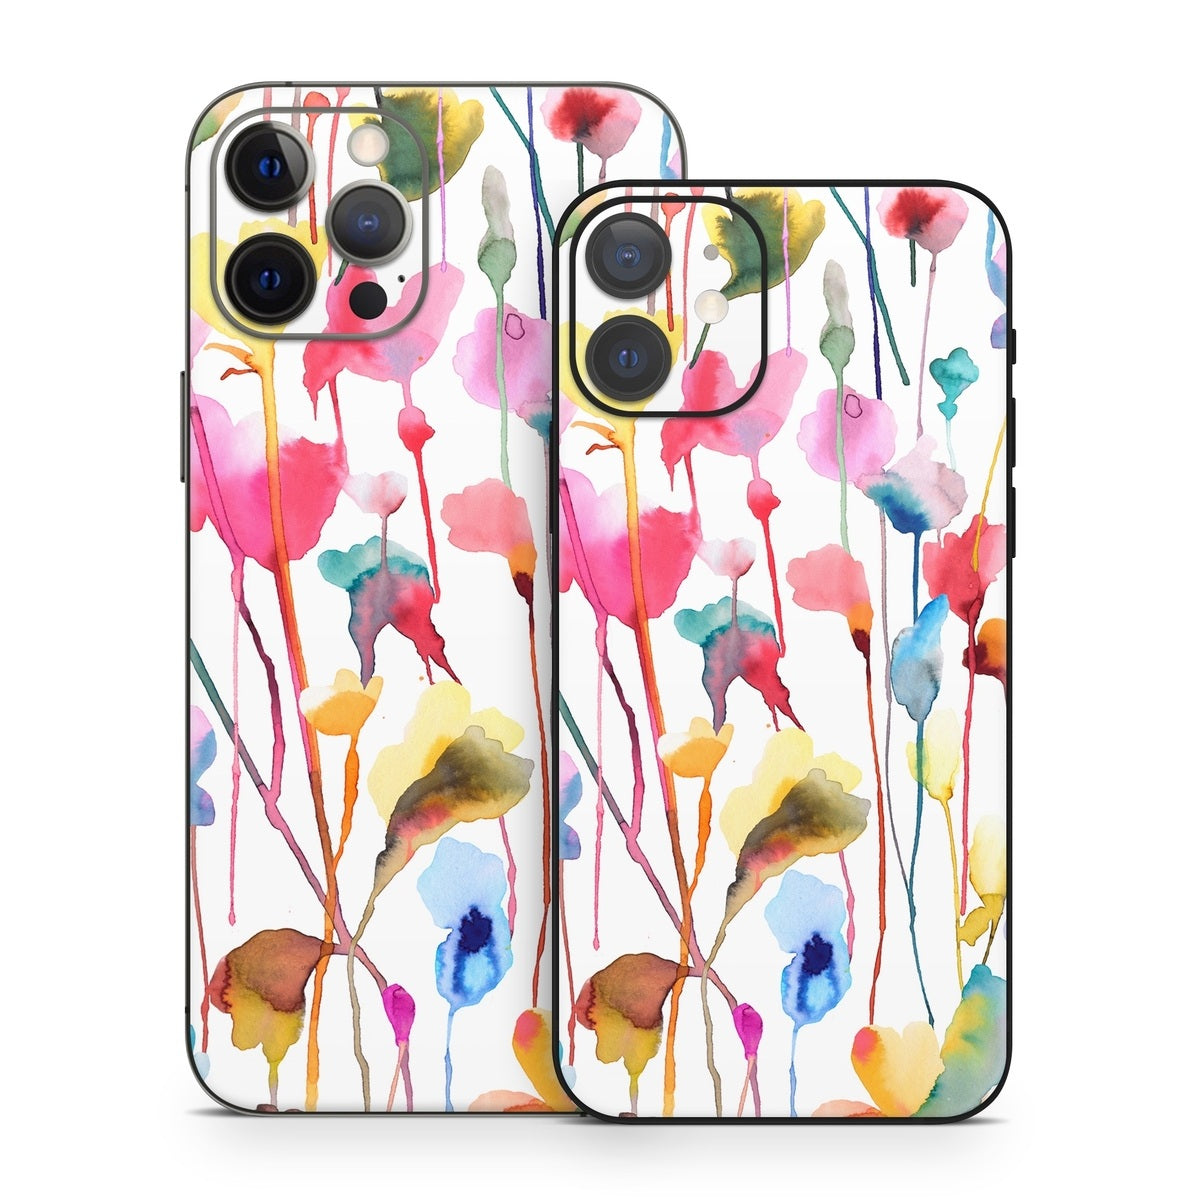 Watercolor Wild Flowers - Apple iPhone 12 Skin